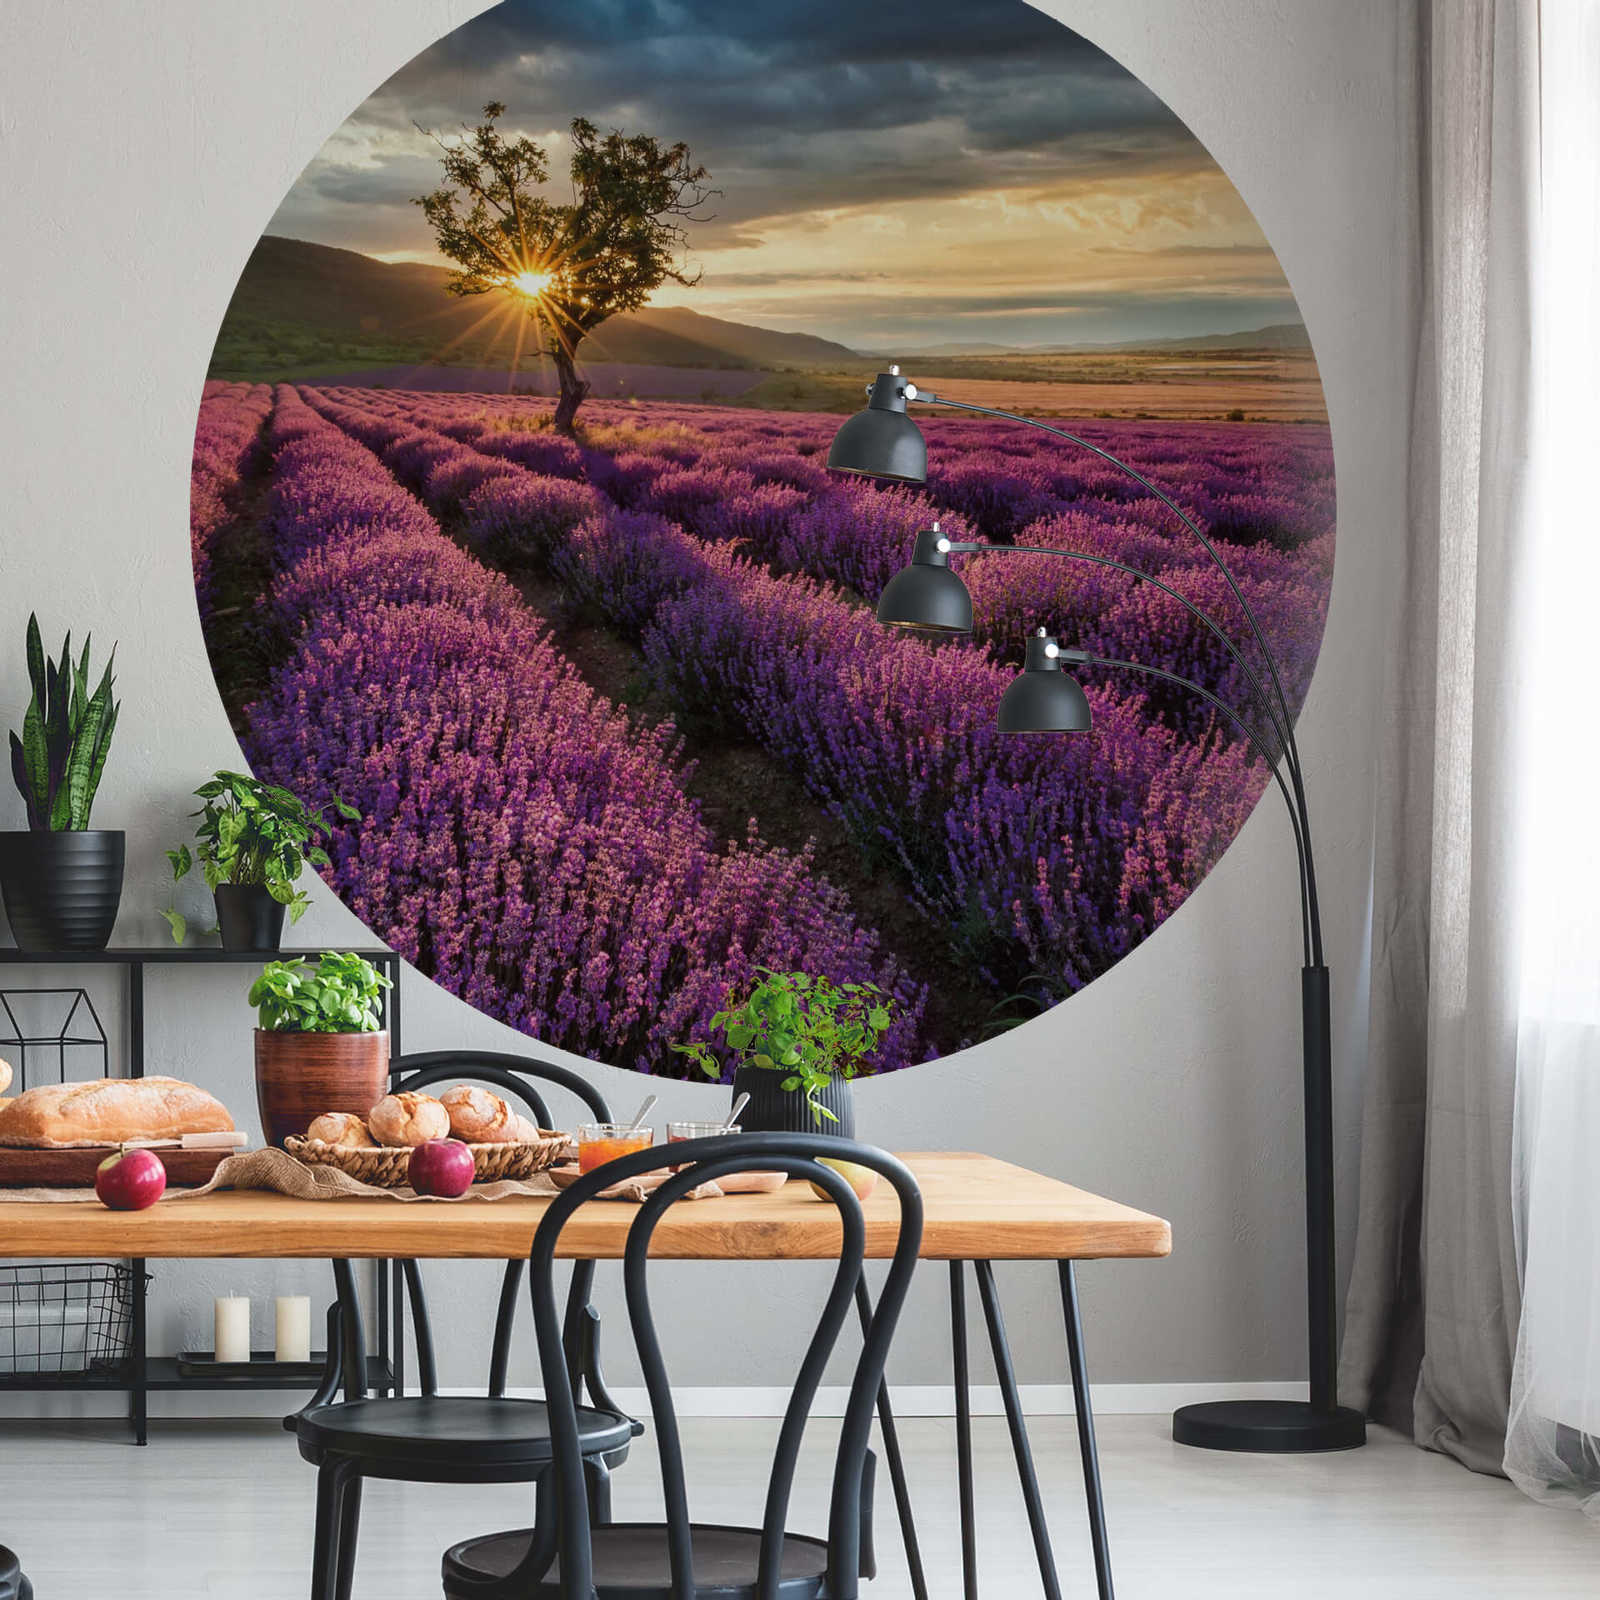             Muurschildering rond lavendelveld in de Provence
        